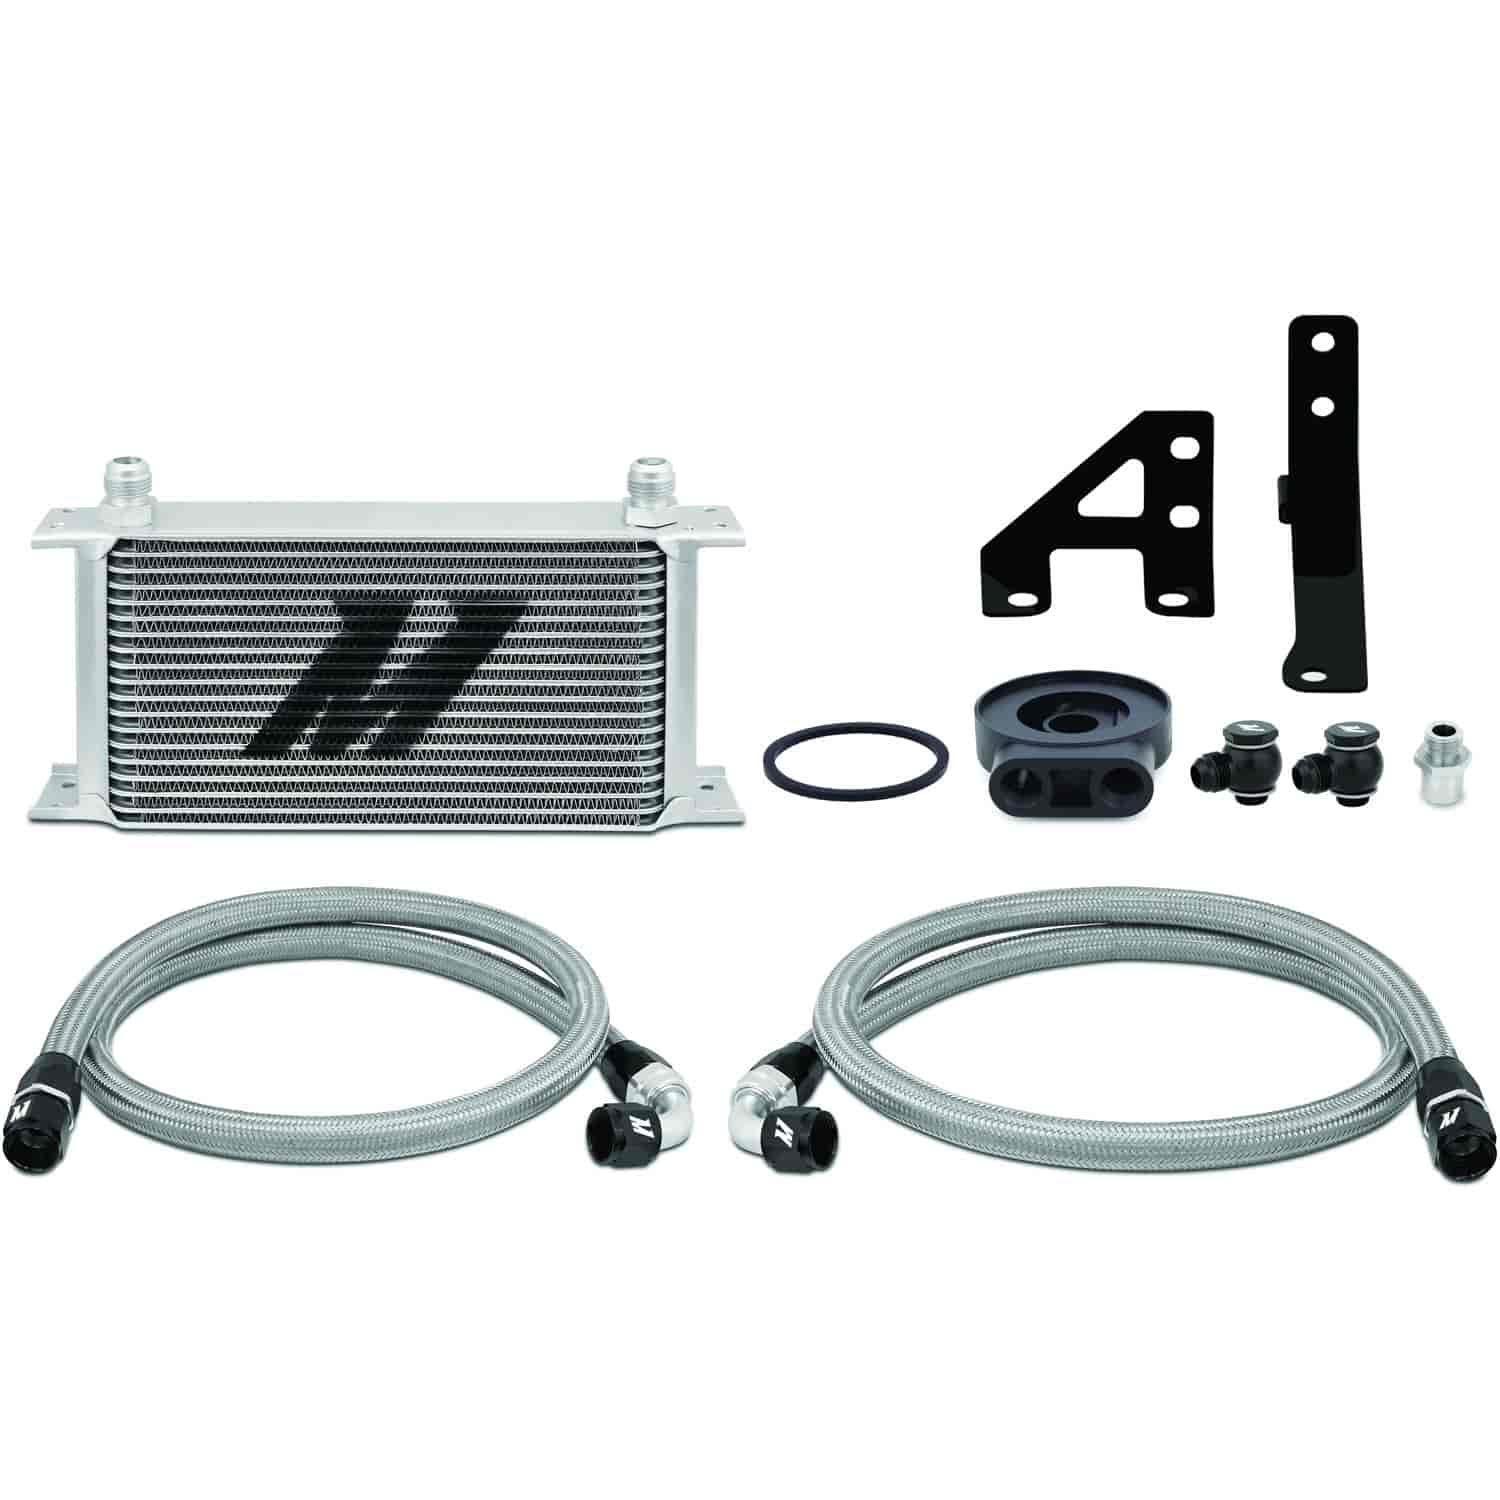 Subaru WRX Oil Cooler Kit - MFG Part No. MMOC-WRX-15